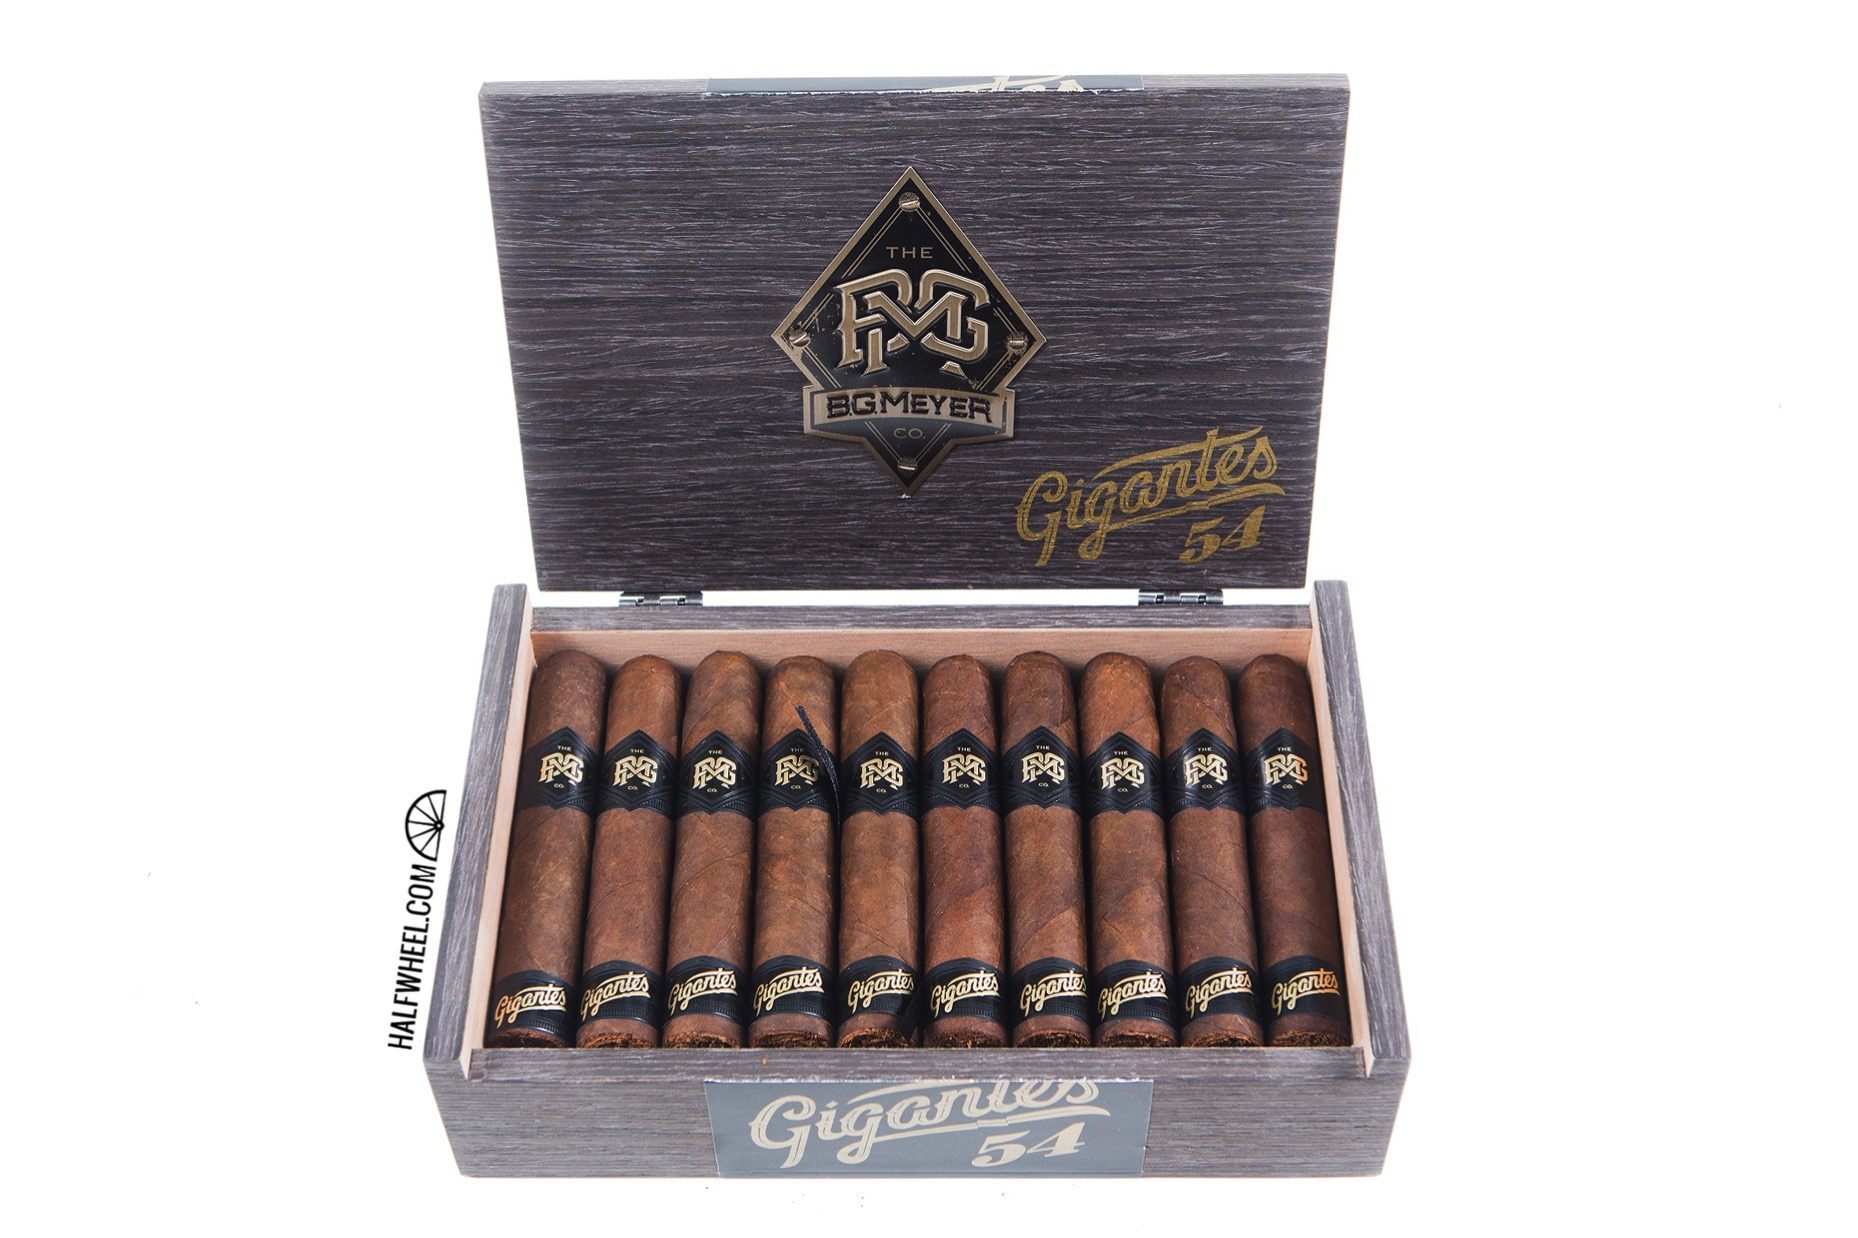 BG Meyer Gigantes 52 Box 3